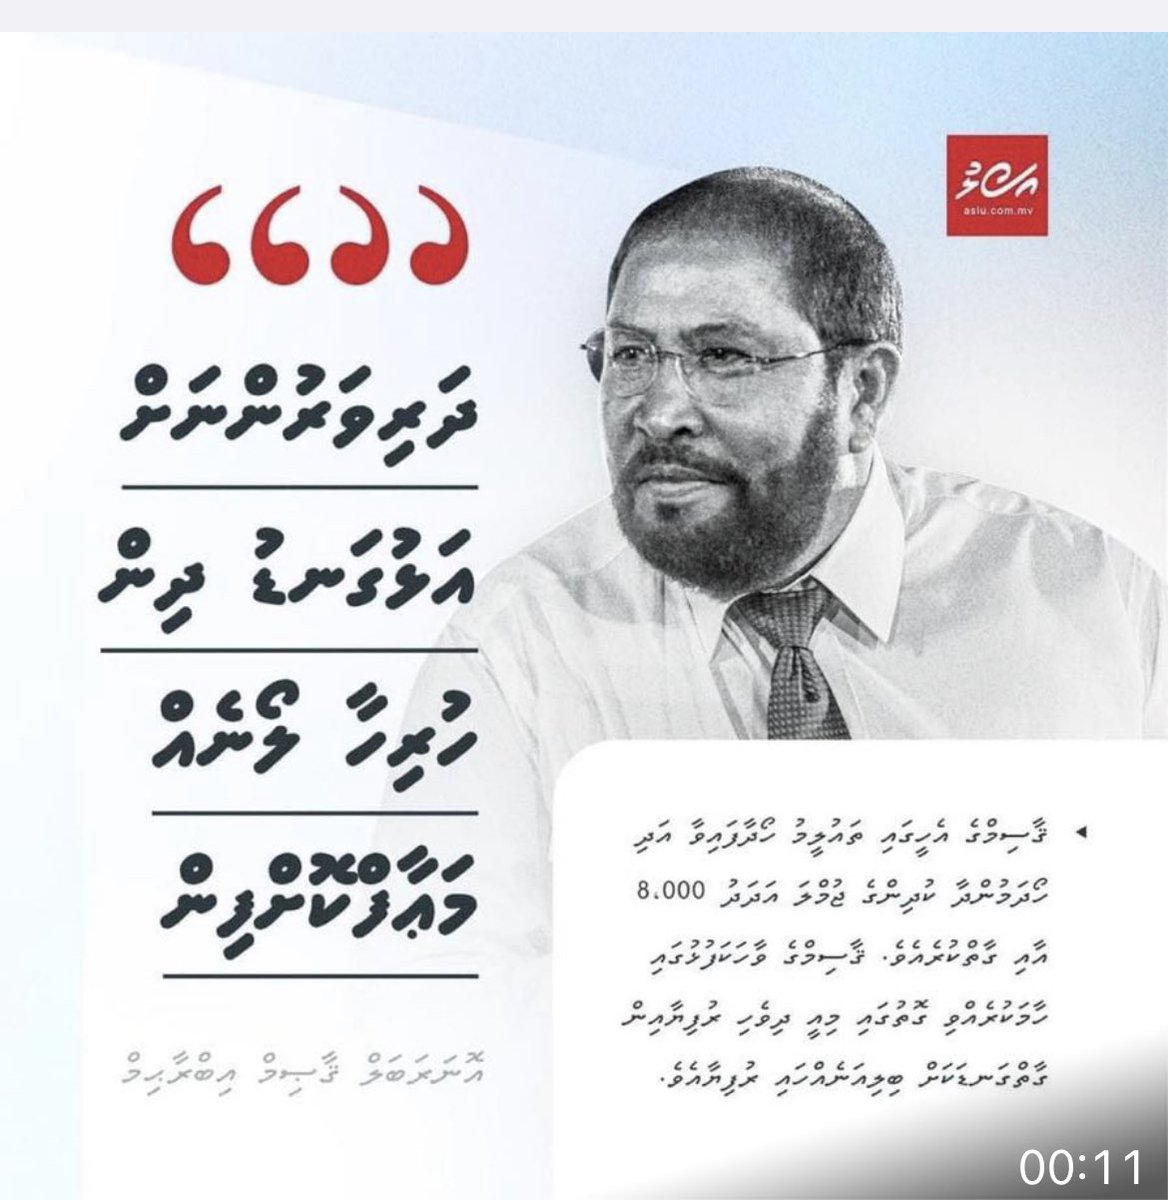 #VoteQasim2023 #QasimAmeen2023 
#Election2023
#MaldivesPolitics
#MaldivesDemocracy
#MaldivesElection2023